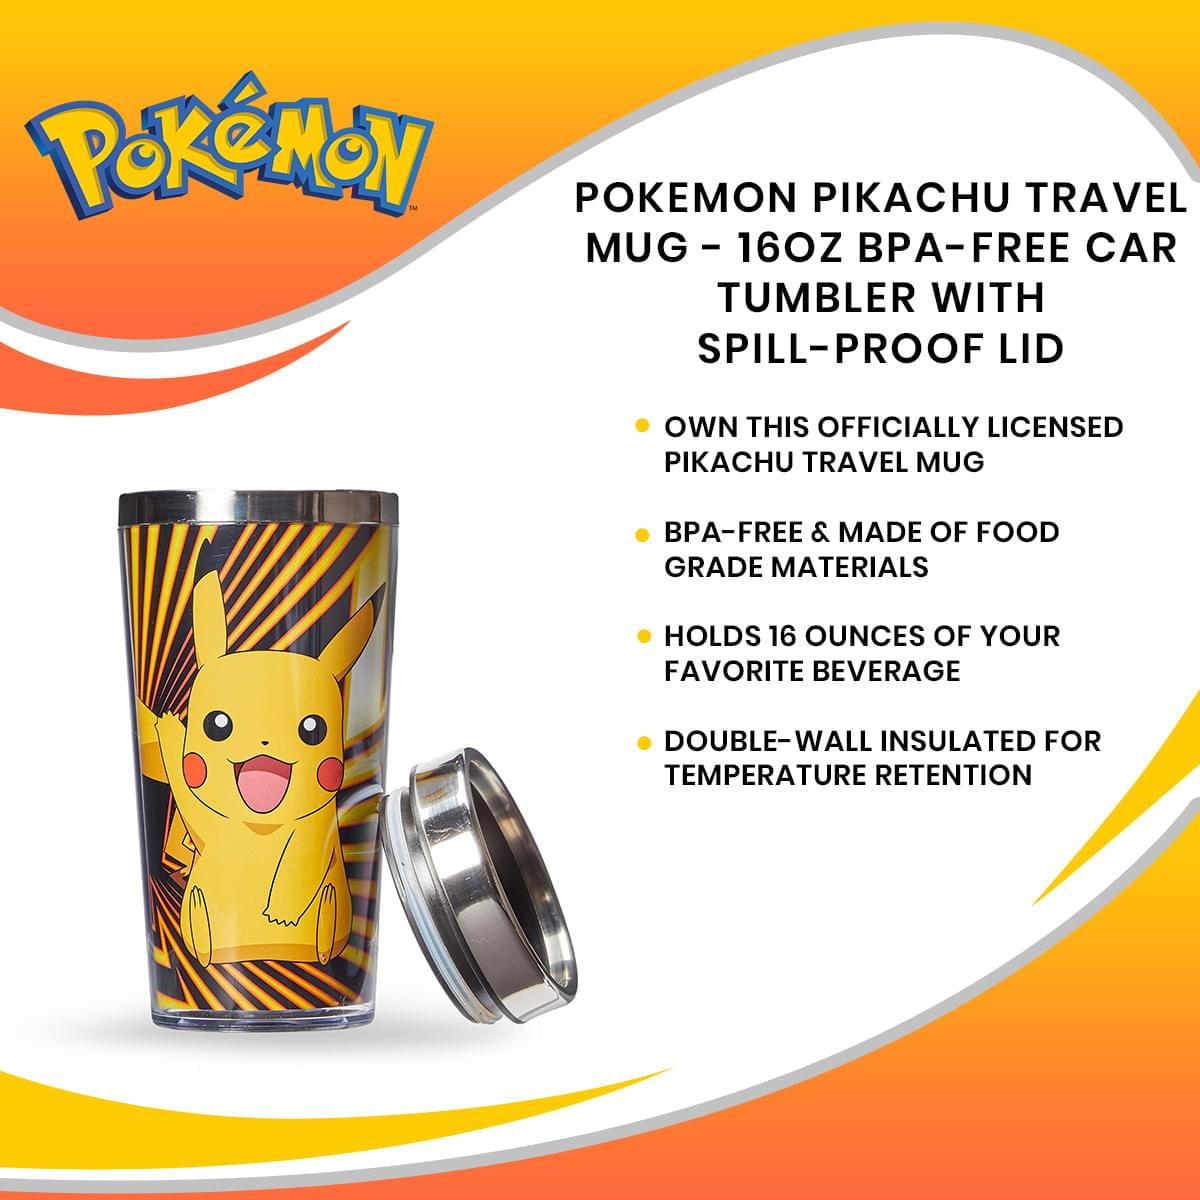 16oz BPA-Free Car Tumbler with Spill-Proof Lid Pokemon Pikachu Travel Mug 